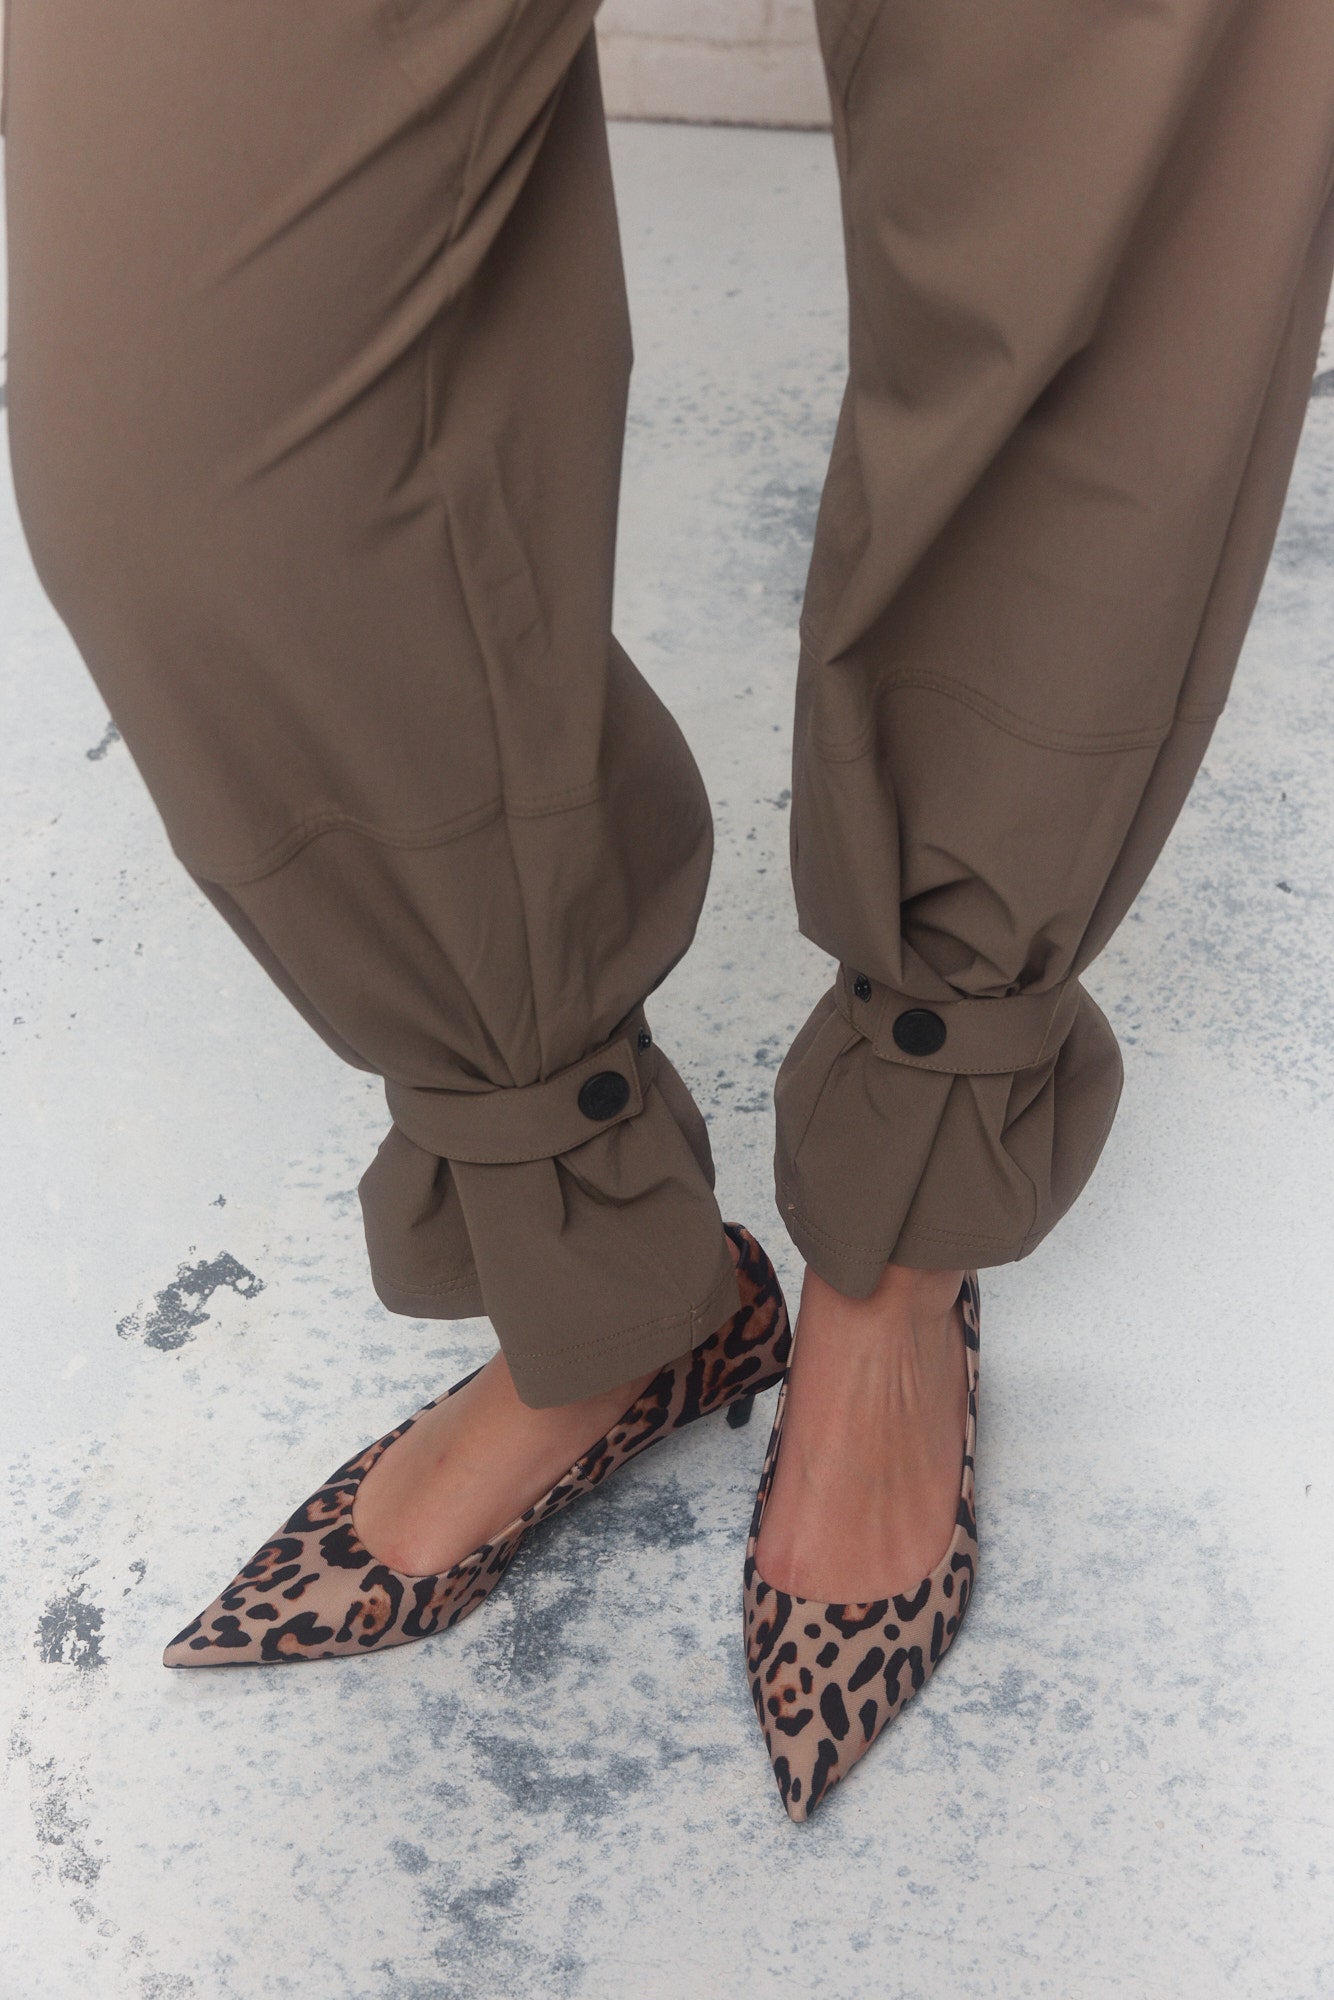 Pantalon vert-kaki ajustable aux chevilles | Raina